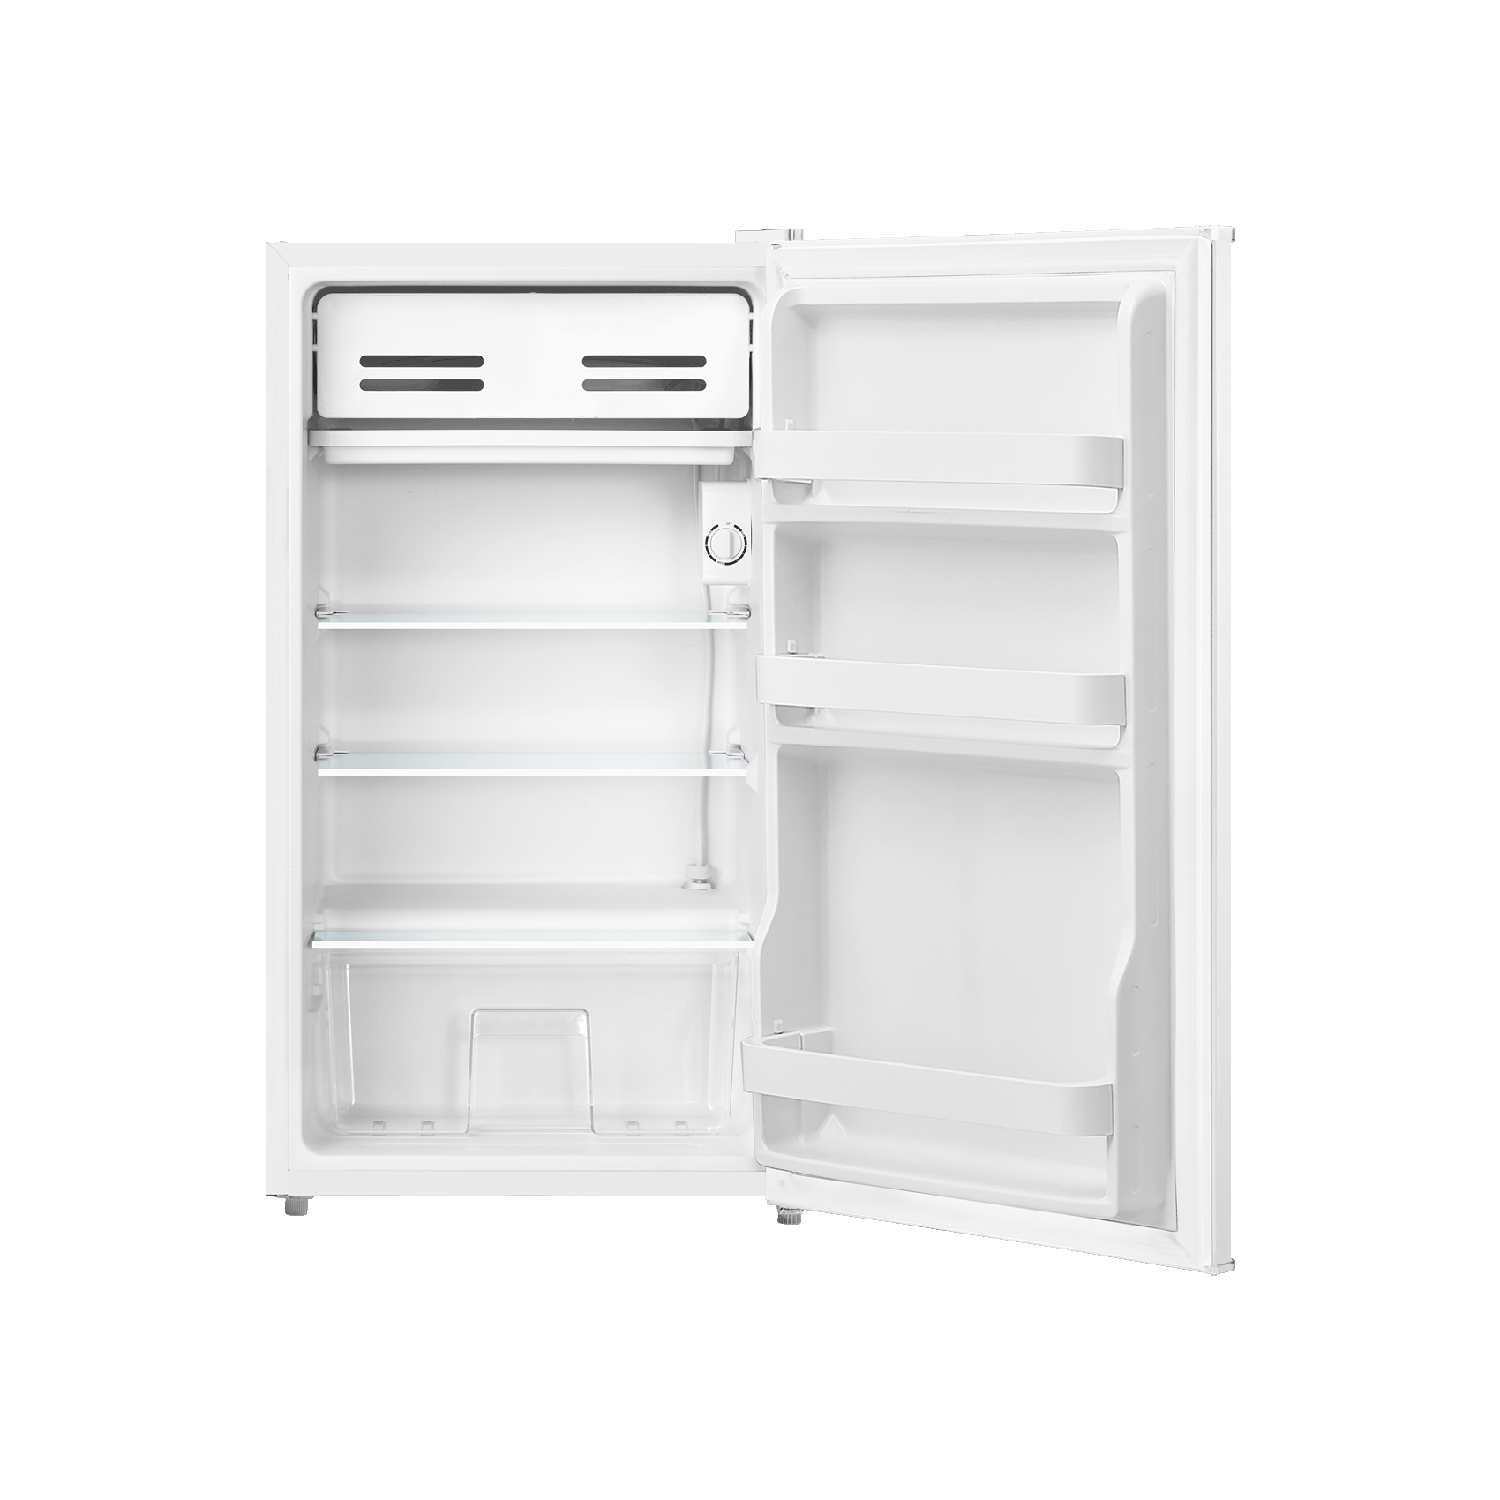 Comfee’ Compact Refrigerator – Global